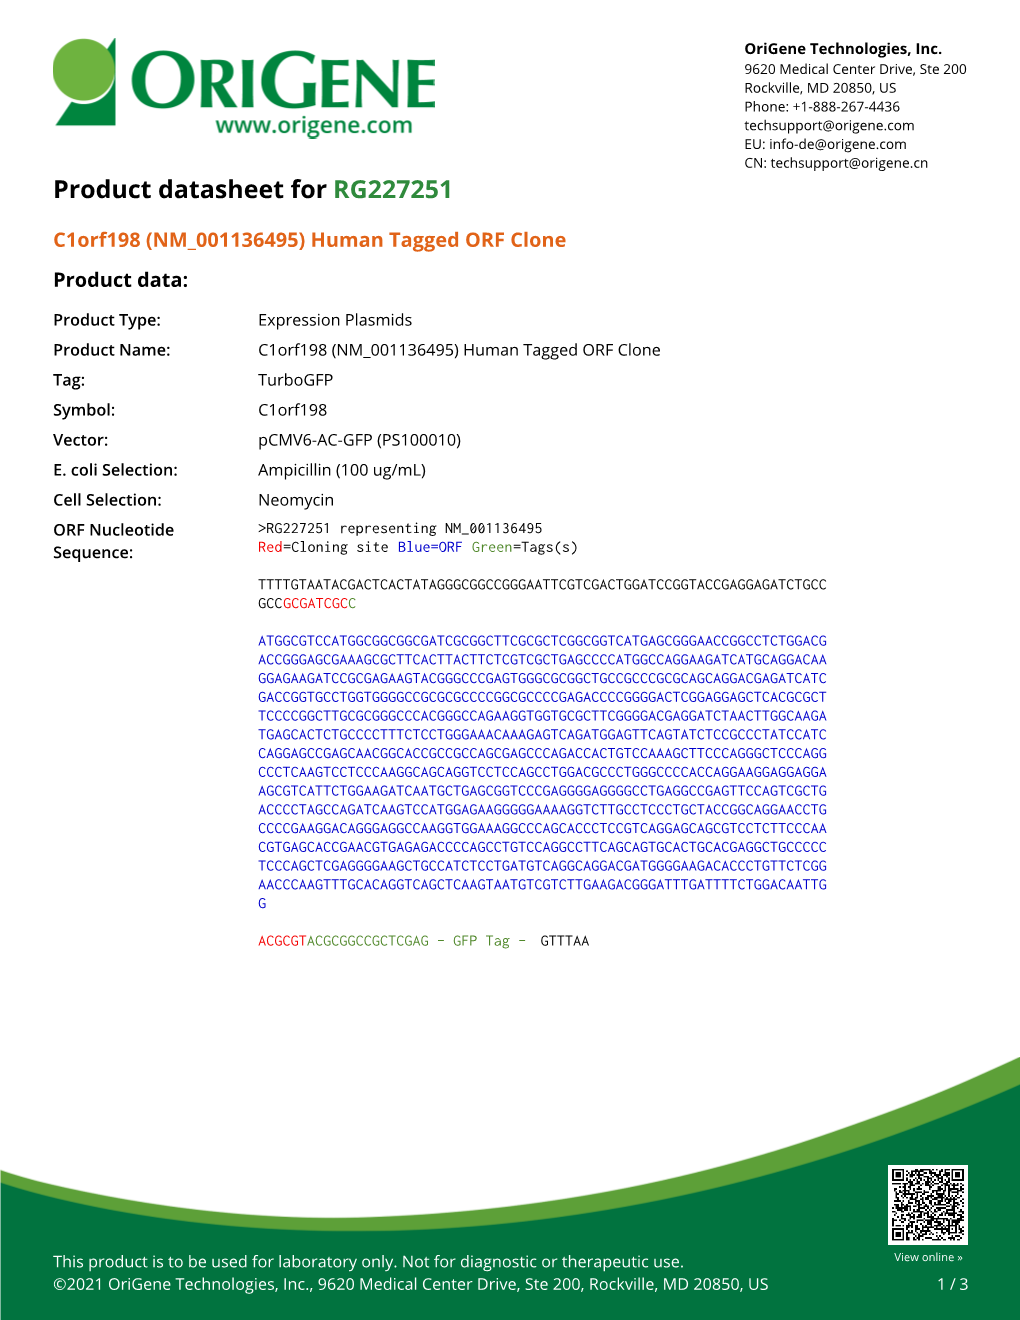 C1orf198 (NM 001136495) Human Tagged ORF Clone – RG227251